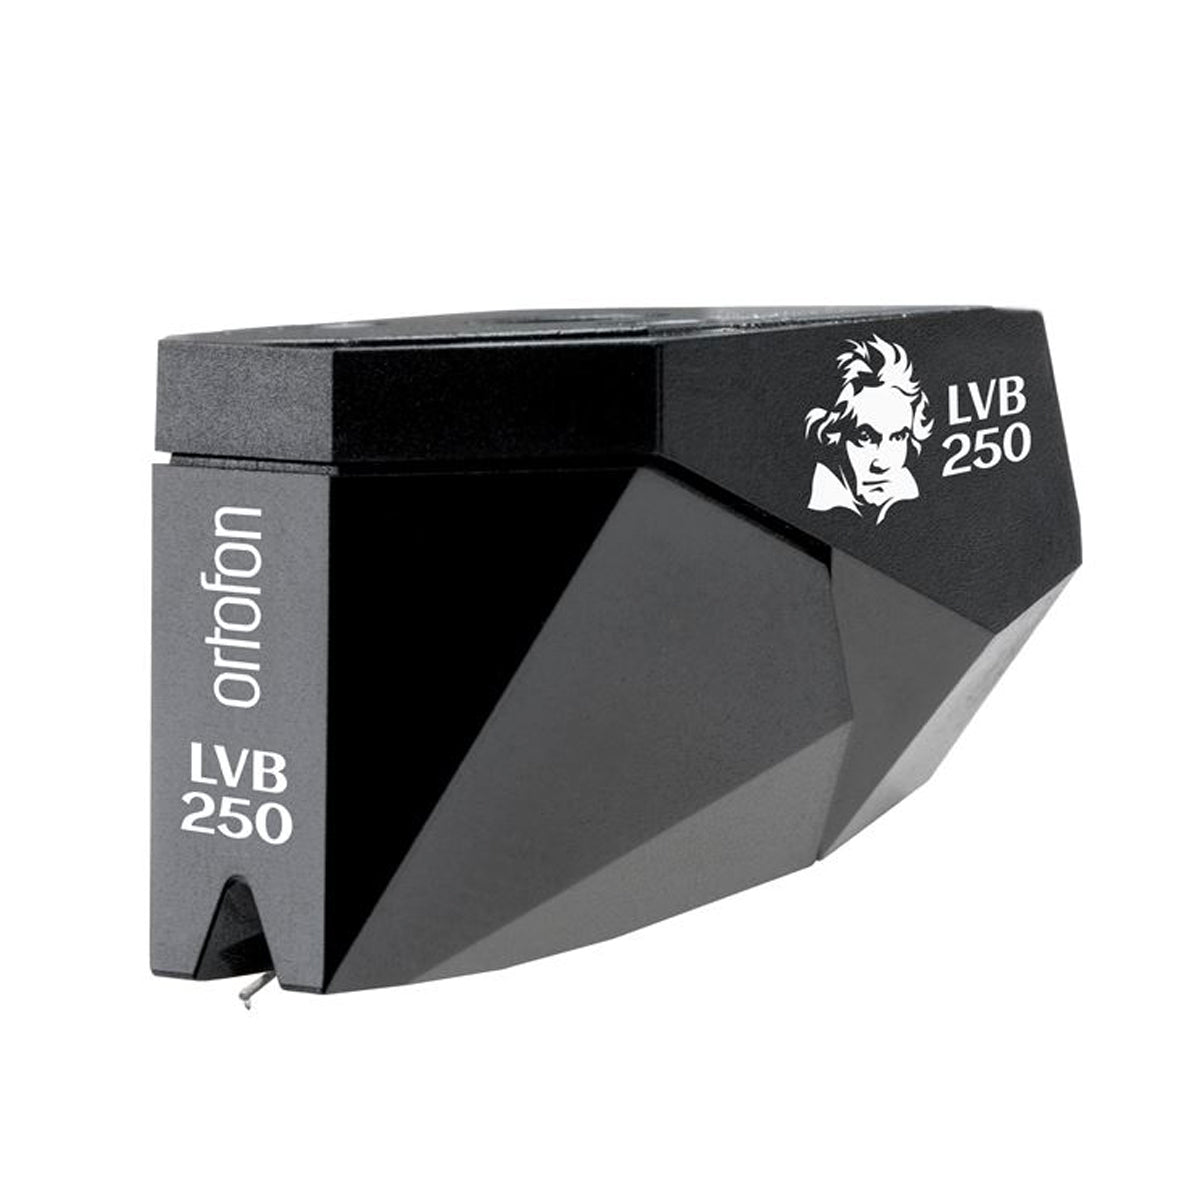 Ortofon Hi-Fi 2M Black LVB 250 Replacement Stylus (Limited Edition) - The Audio Experts